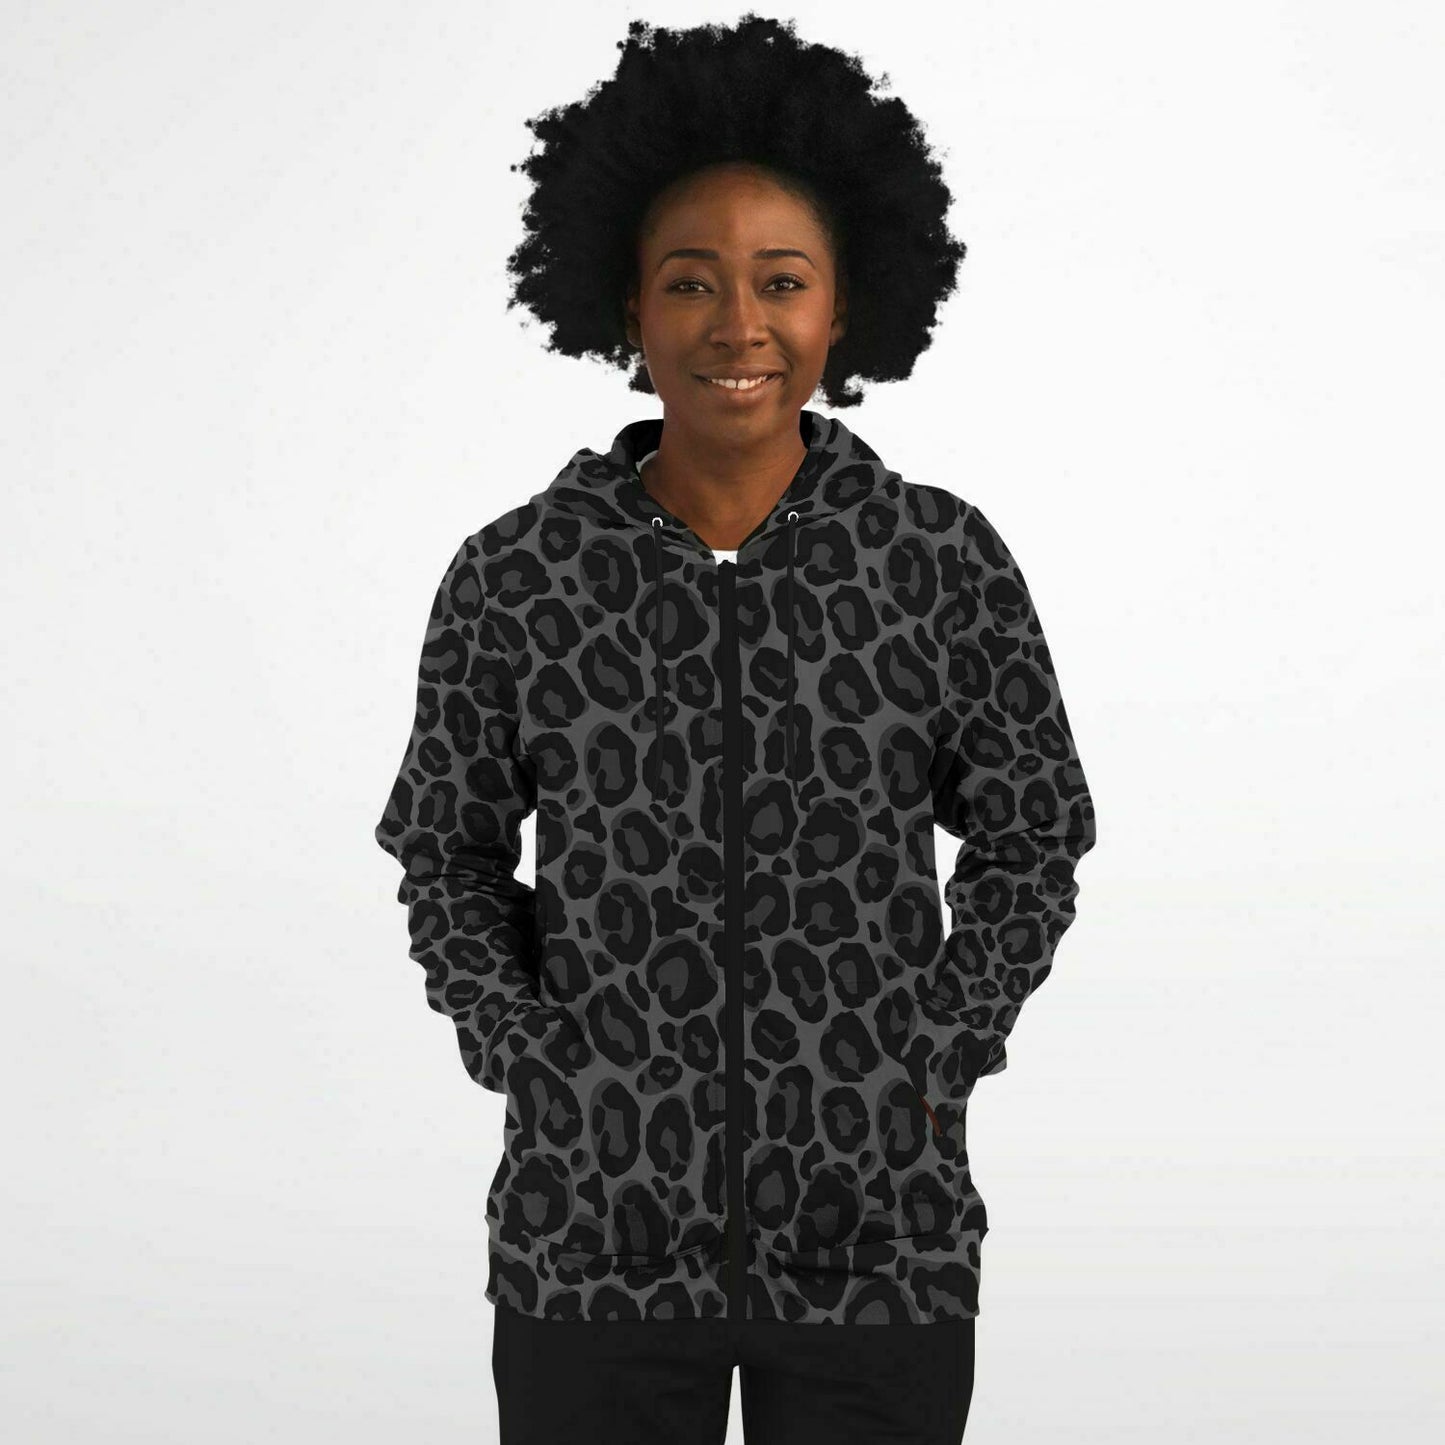 Black Leopard Zip Up Hoodie, Animal Print Cheetah Full Zipper Pocket Men Women Unisex Ladies Cool Aesthetic Cotton Fleece Hooded Sweatshirt